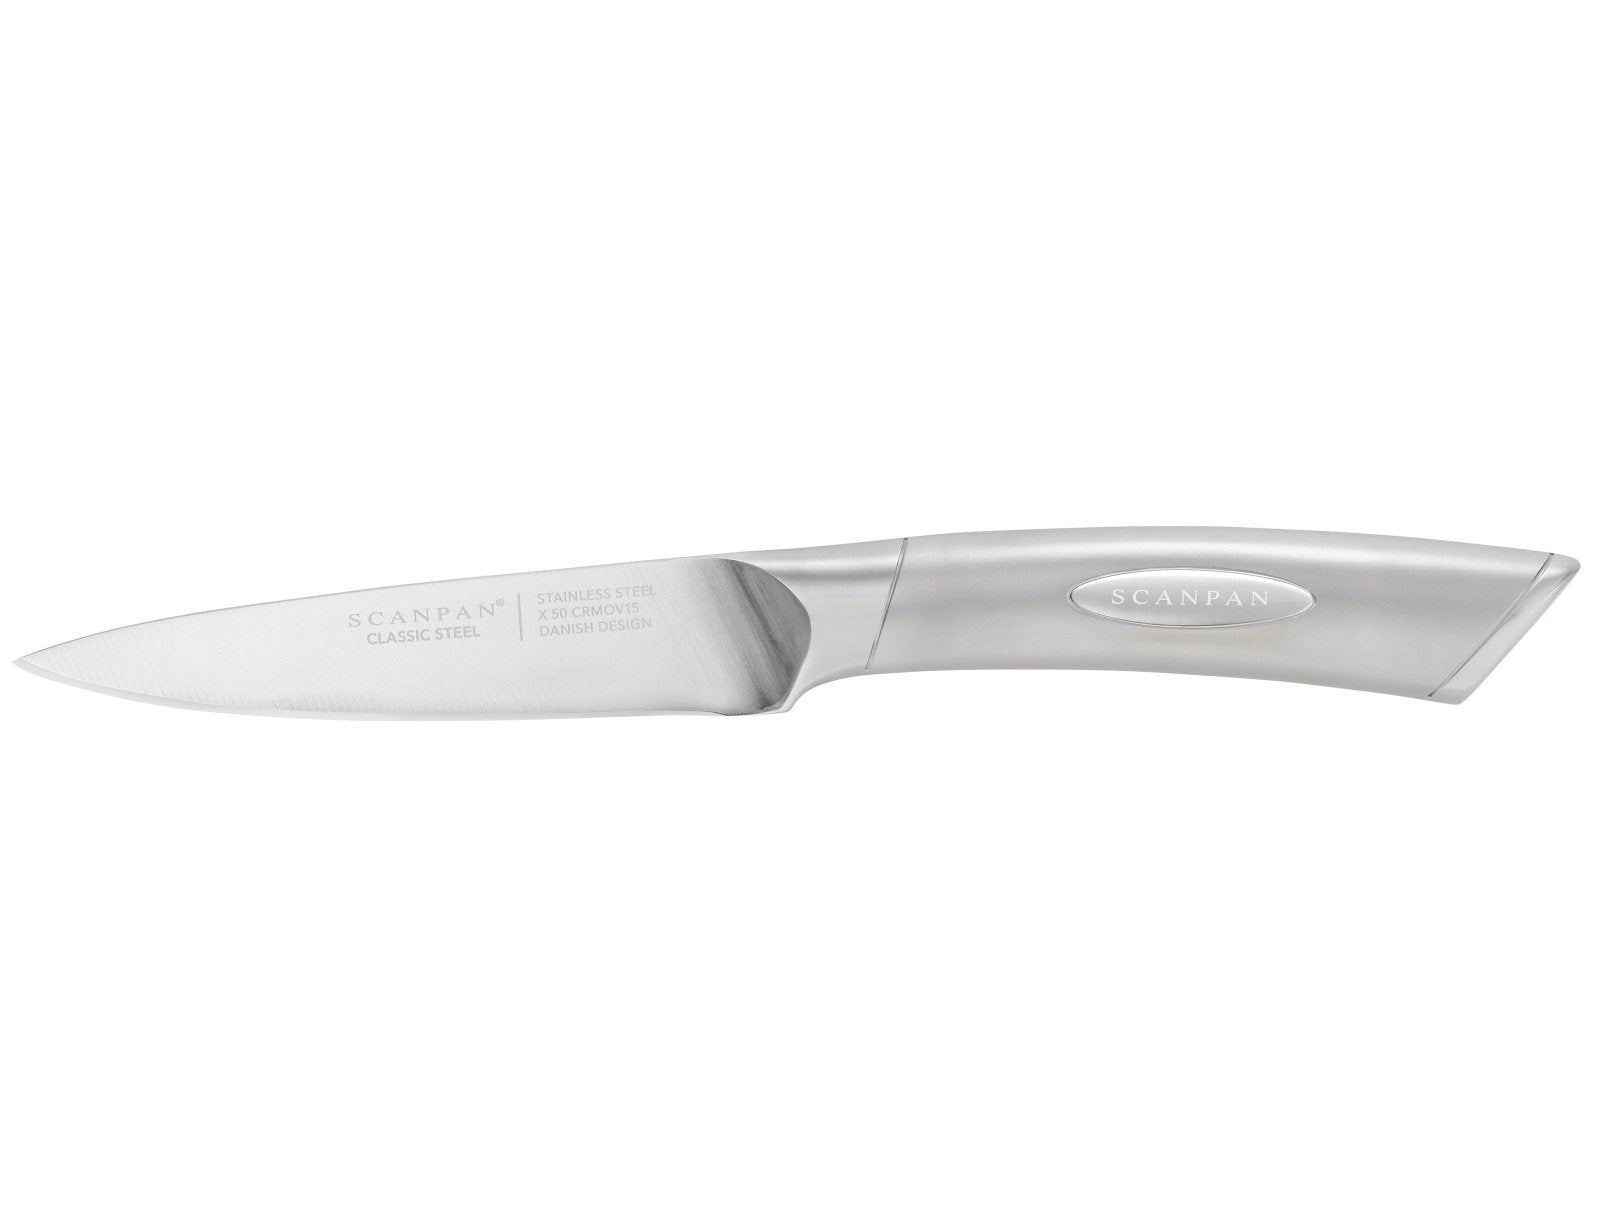 Scanpan Classic Steel 6pc Knife Block Set - SP9001060600 - The Cotswold Knife Company